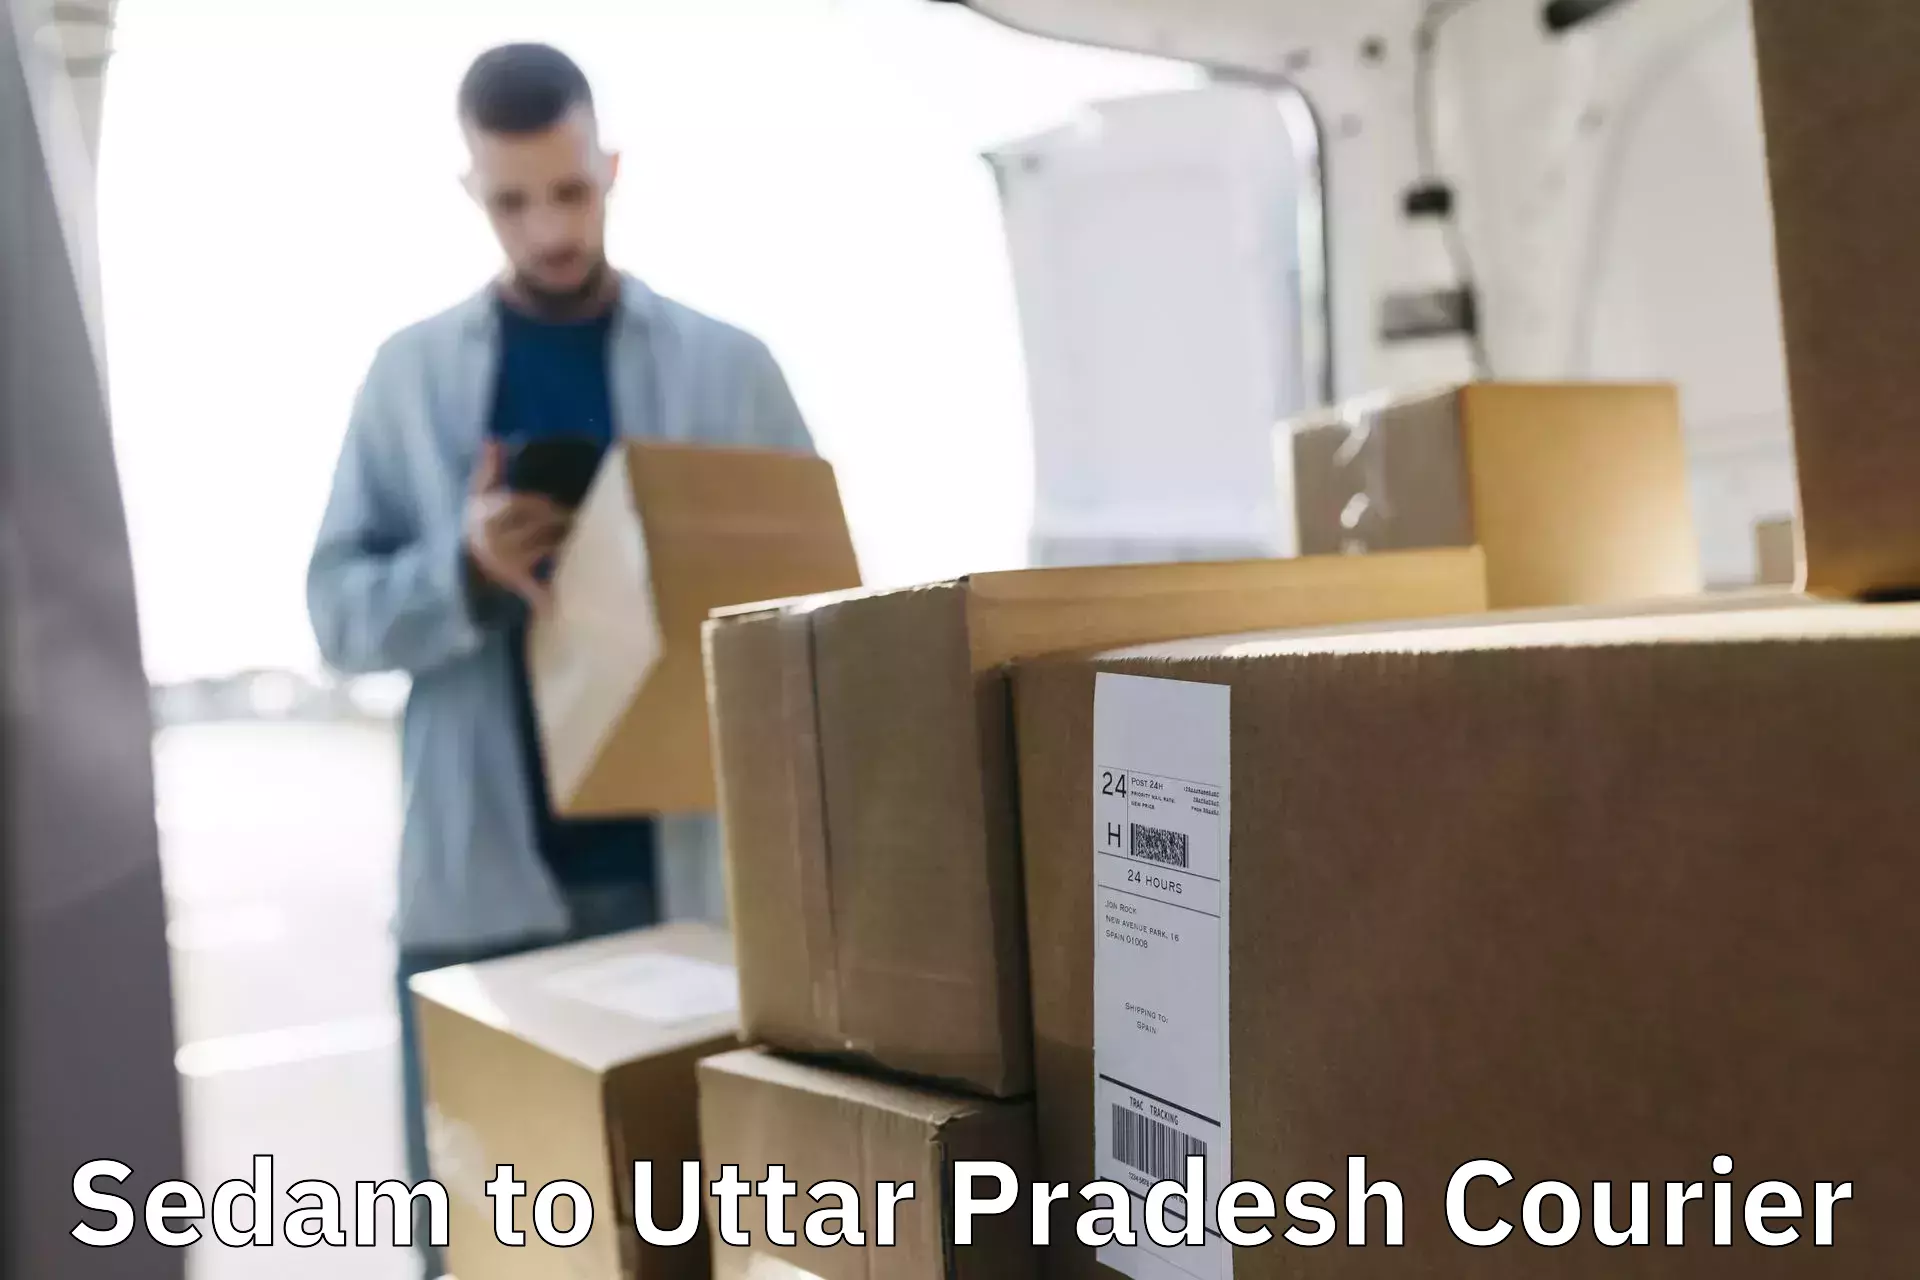 Courier service innovation Sedam to Agra